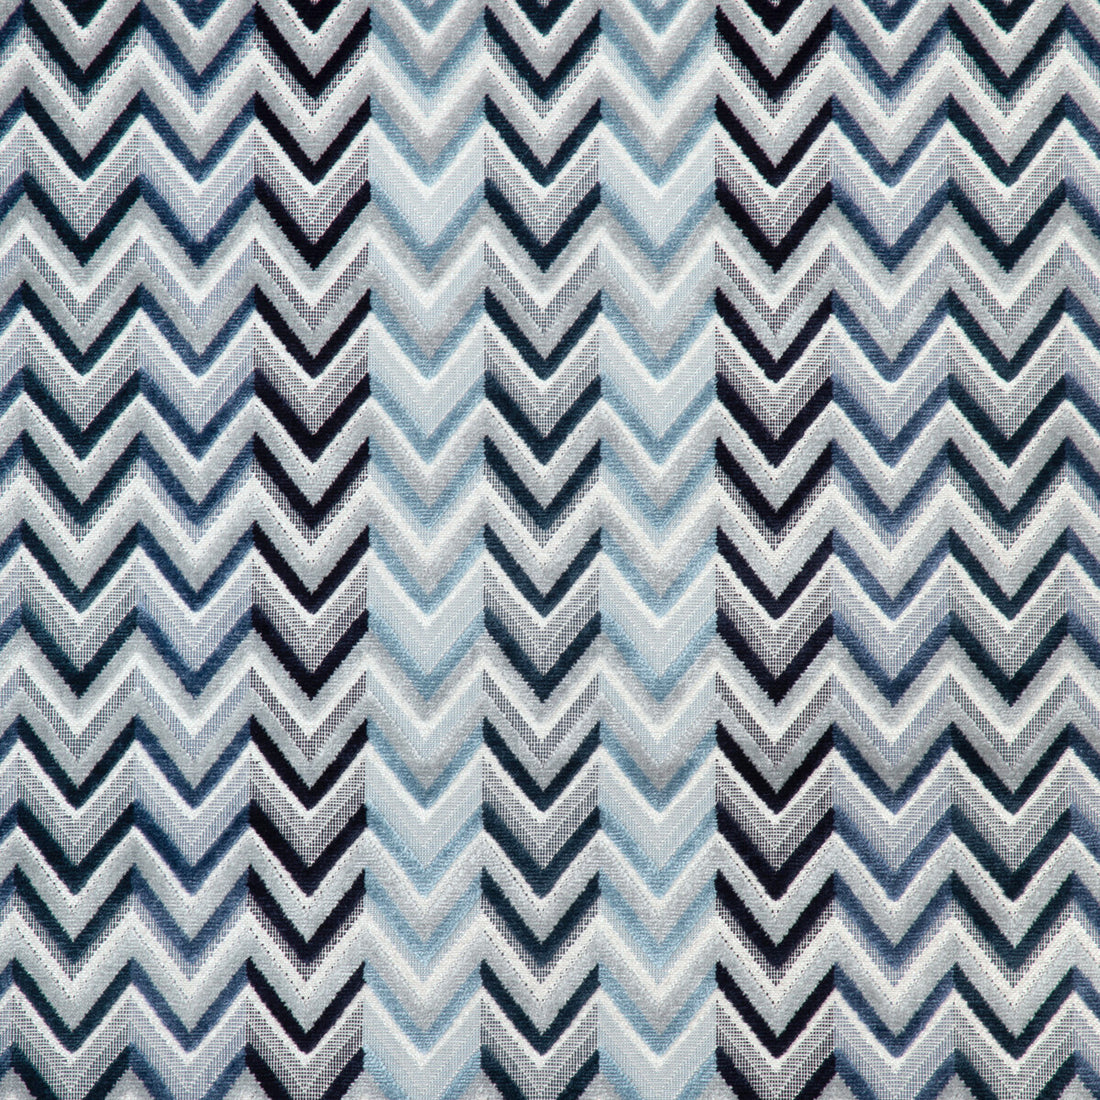 Kravet Design fabric in 36912-155 color - pattern 36912.155.0 - by Kravet Design in the Modern Velvets collection